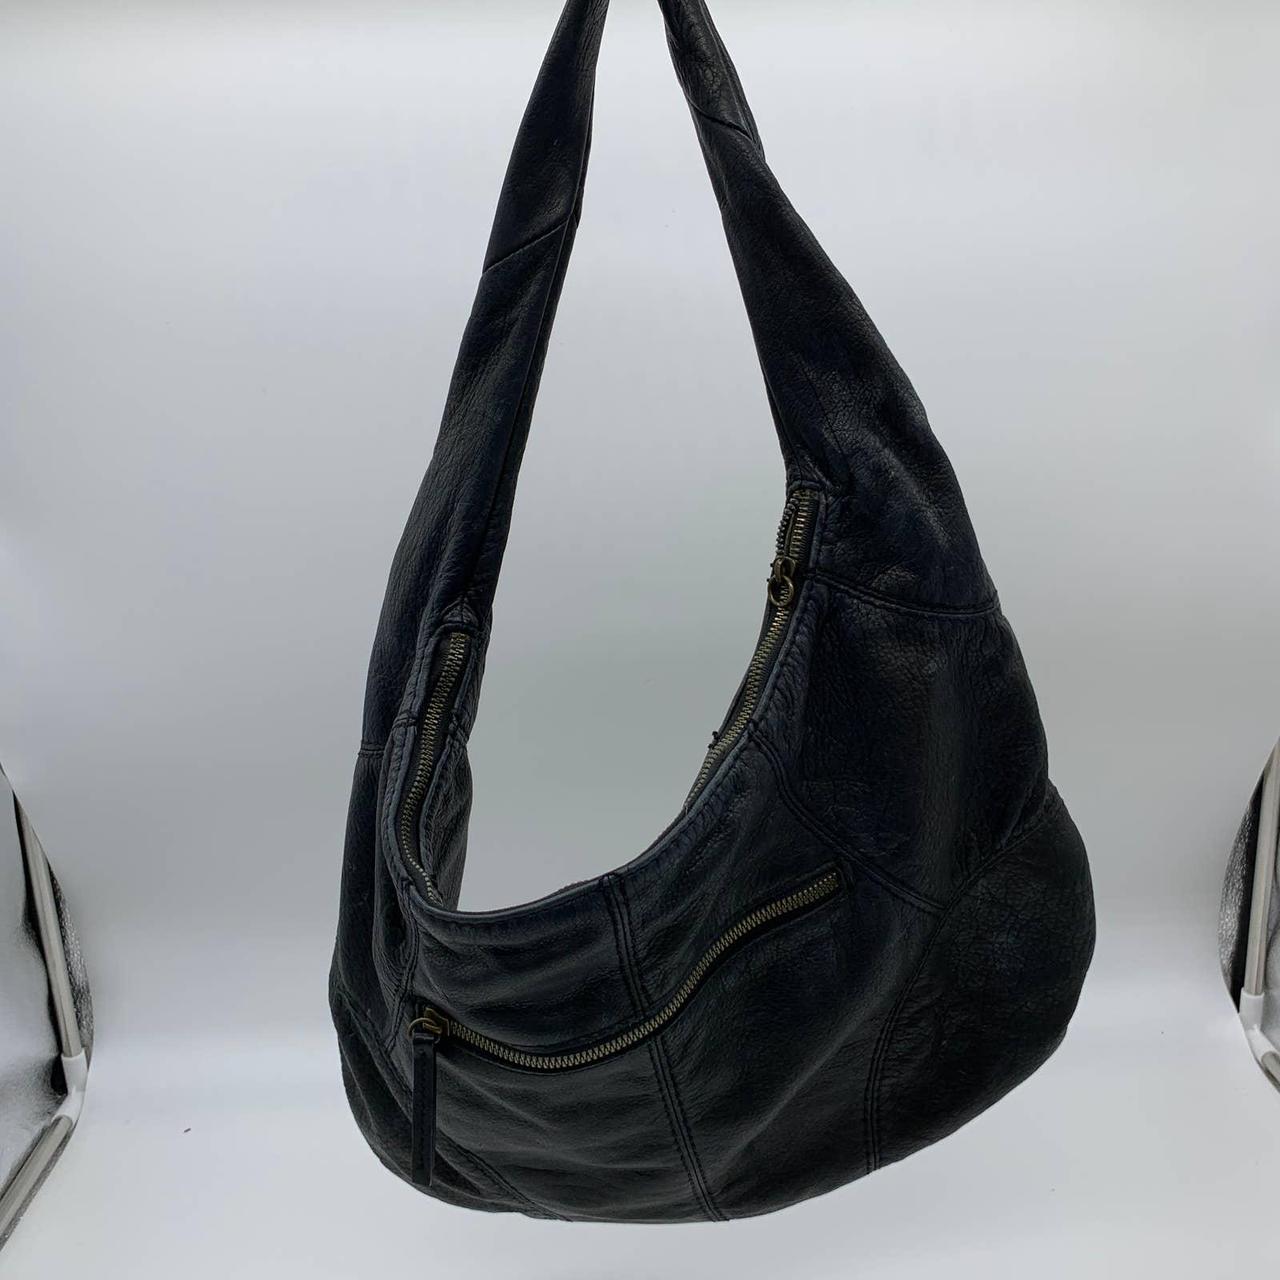 American Leather Co. handbag #americanleatherco - Depop